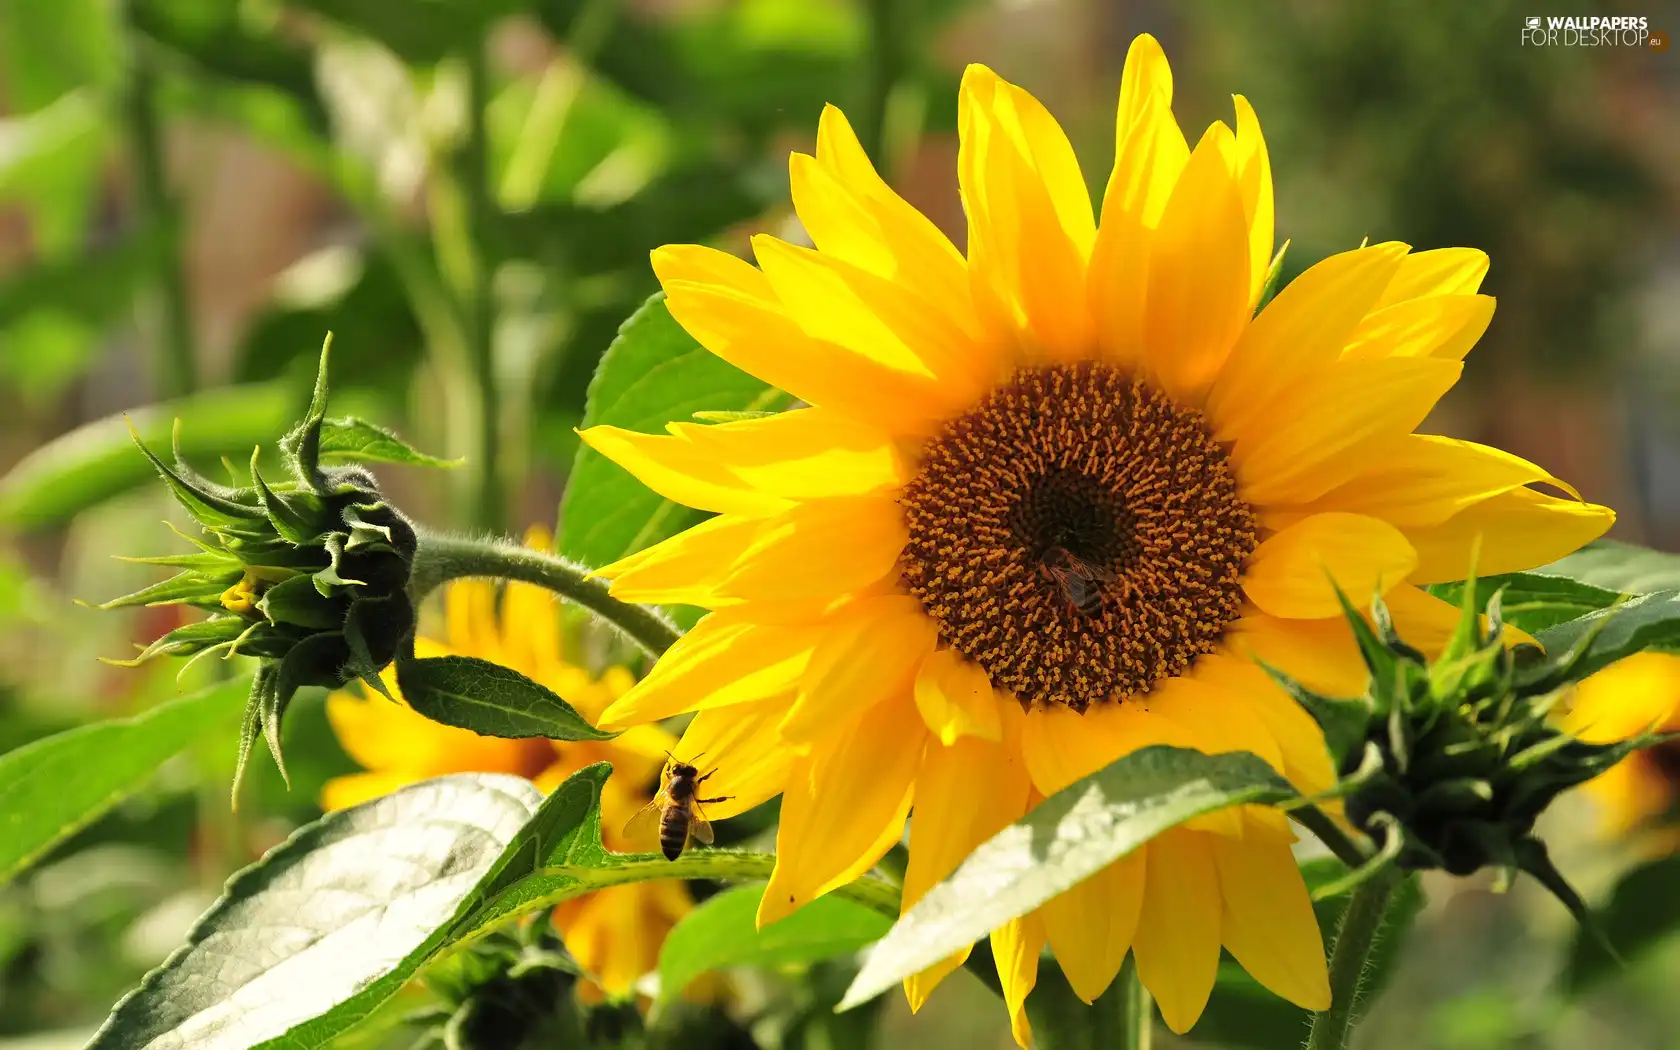 sun, Sunflower, rays